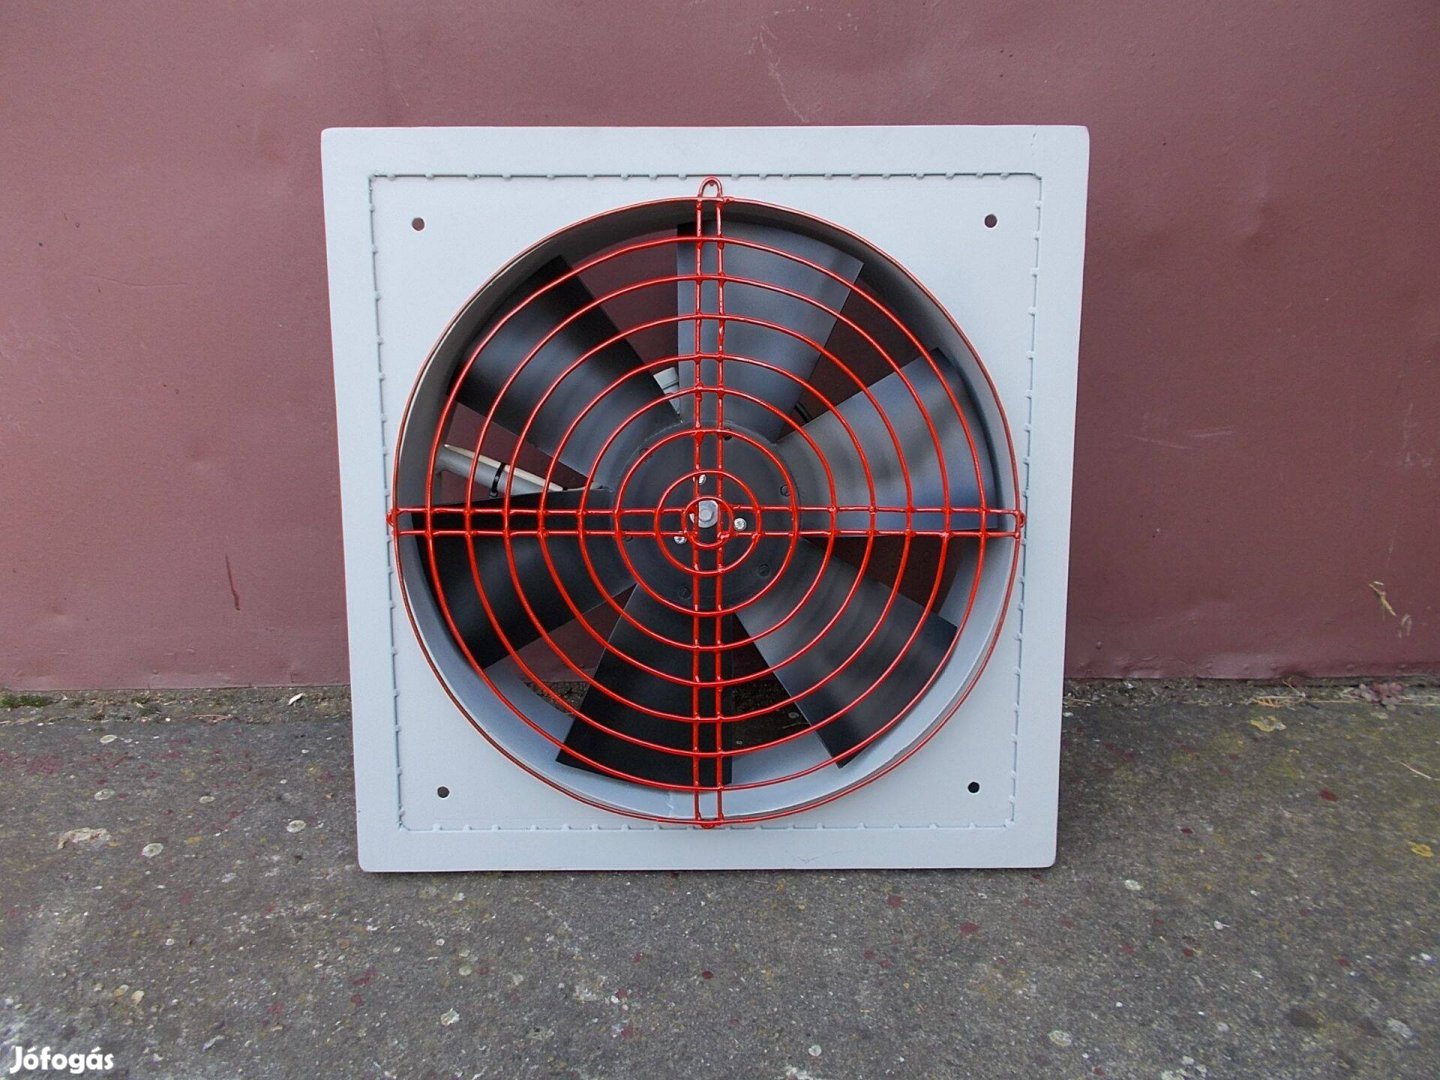 40,4 cm-es felújított ipari ventilátor 220V-70W-1350f/p villanymotor